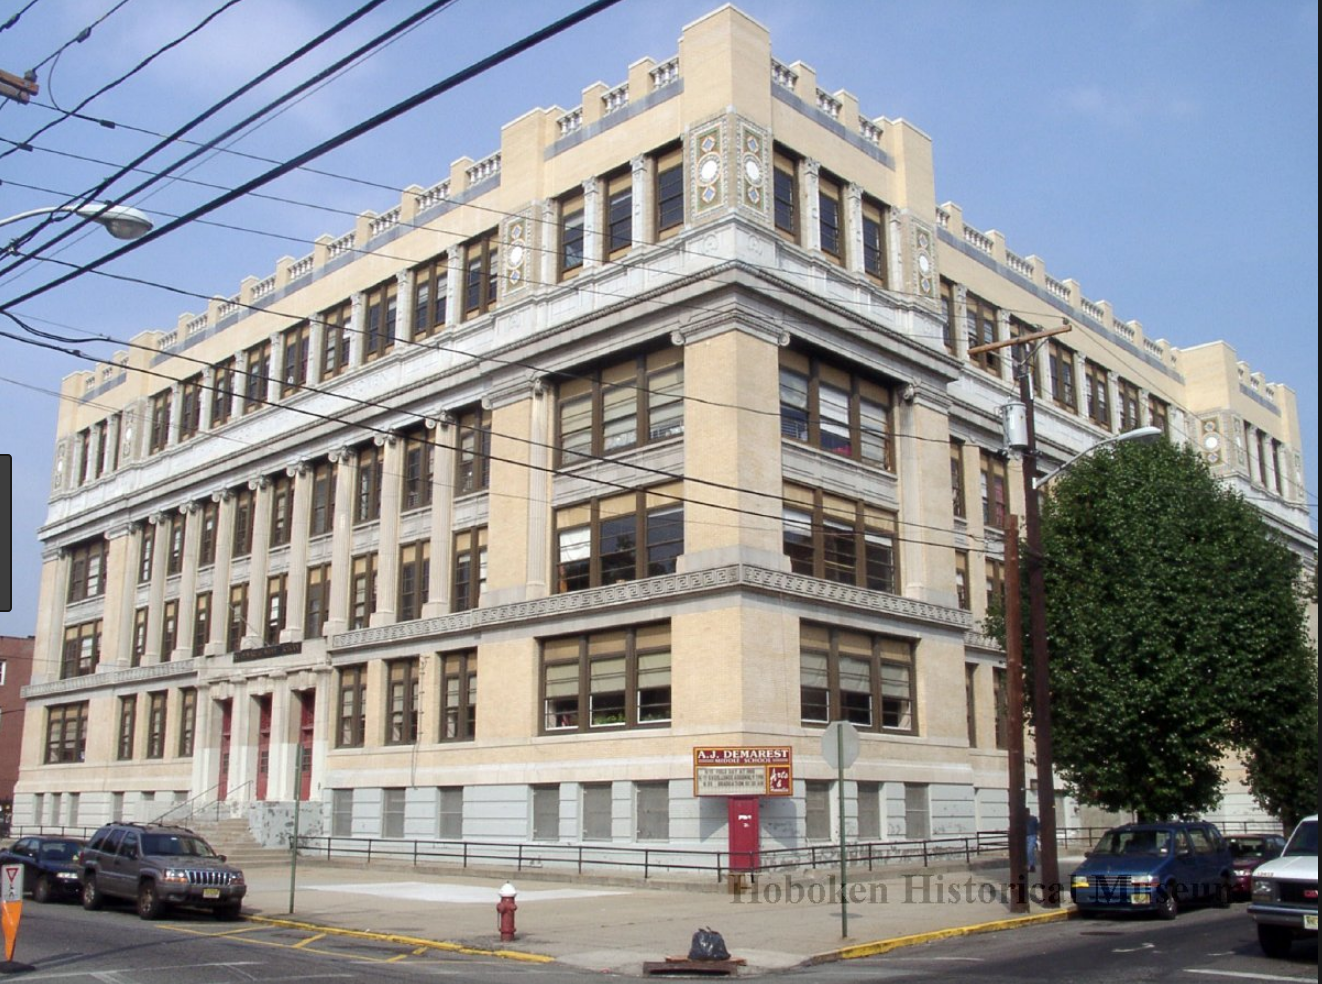 Hoboken Curriculum Project: HOBOKEN MIDDLE SCHOOL Among Lowest Performing Public Schools in Hoboken, Hudson County, and New Jersey on NJDOE Educational Quality Metrics